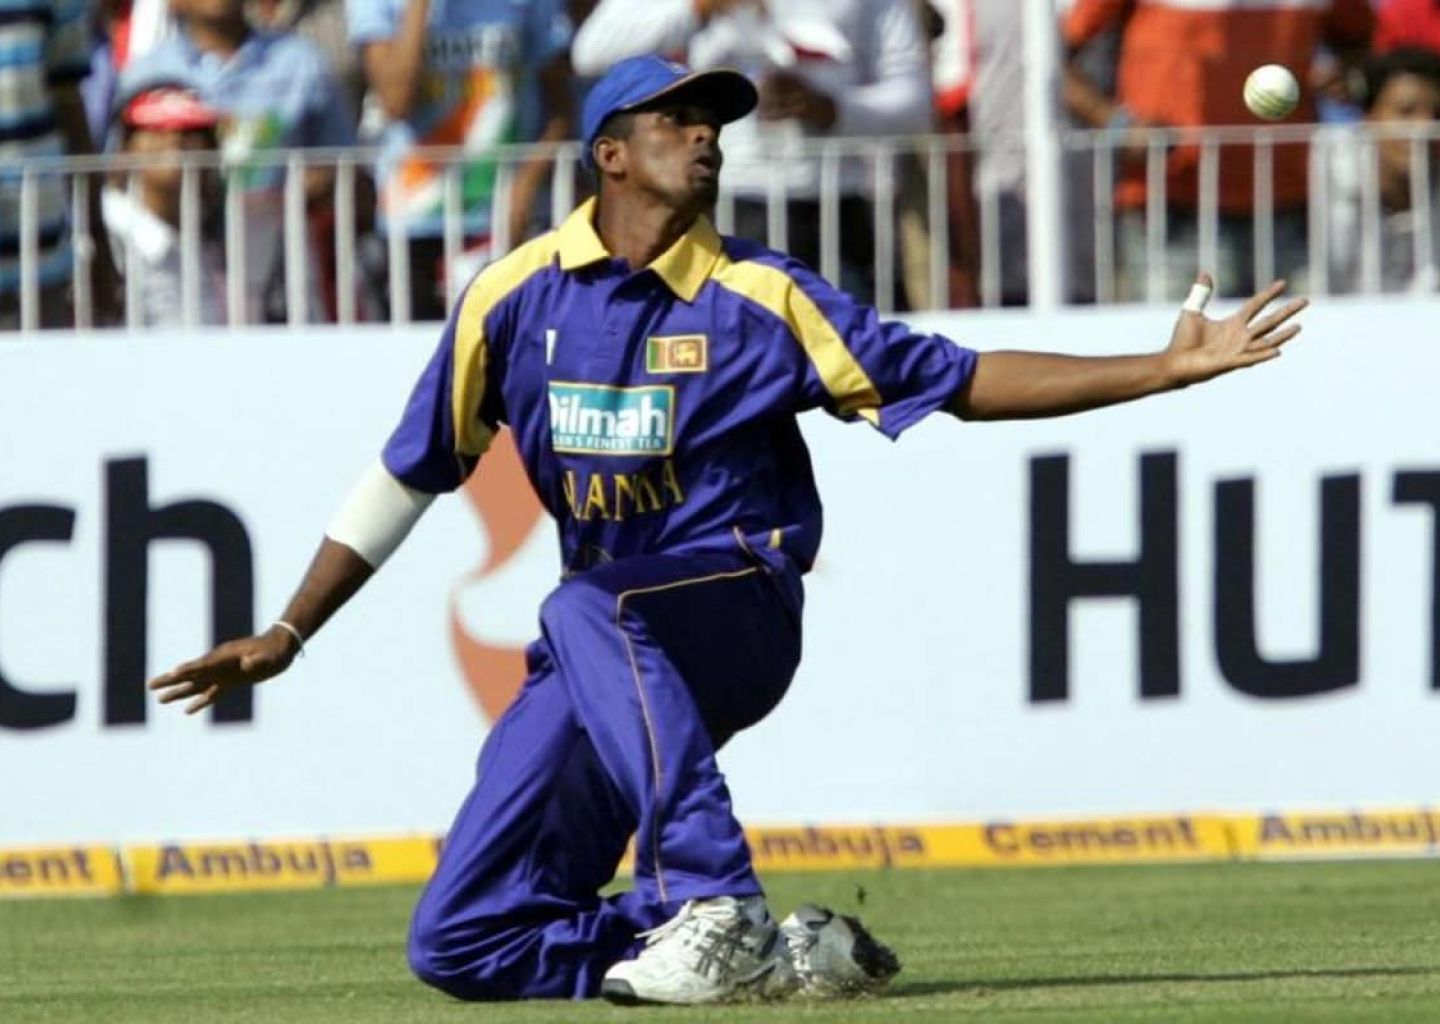 Former Sri Lanka cricketer Lokuhettige found guilty of corrupt practices in T10